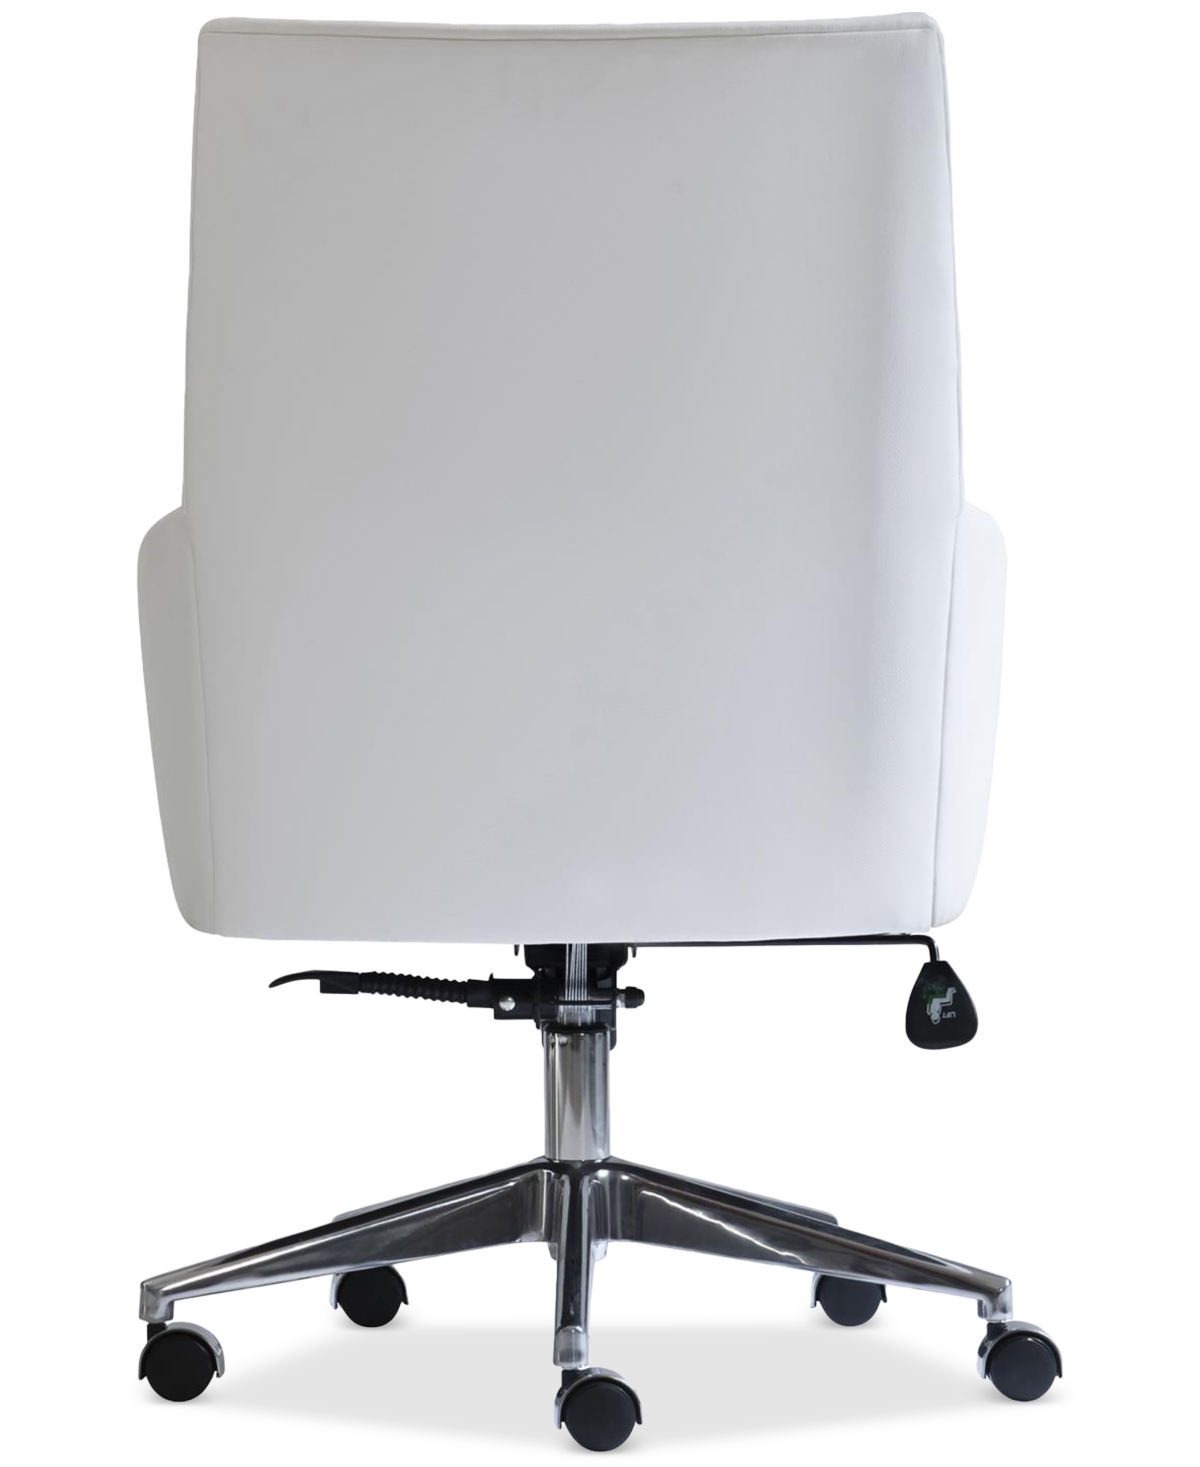 Shop Bernhardt Stratum Office Chair In No Color